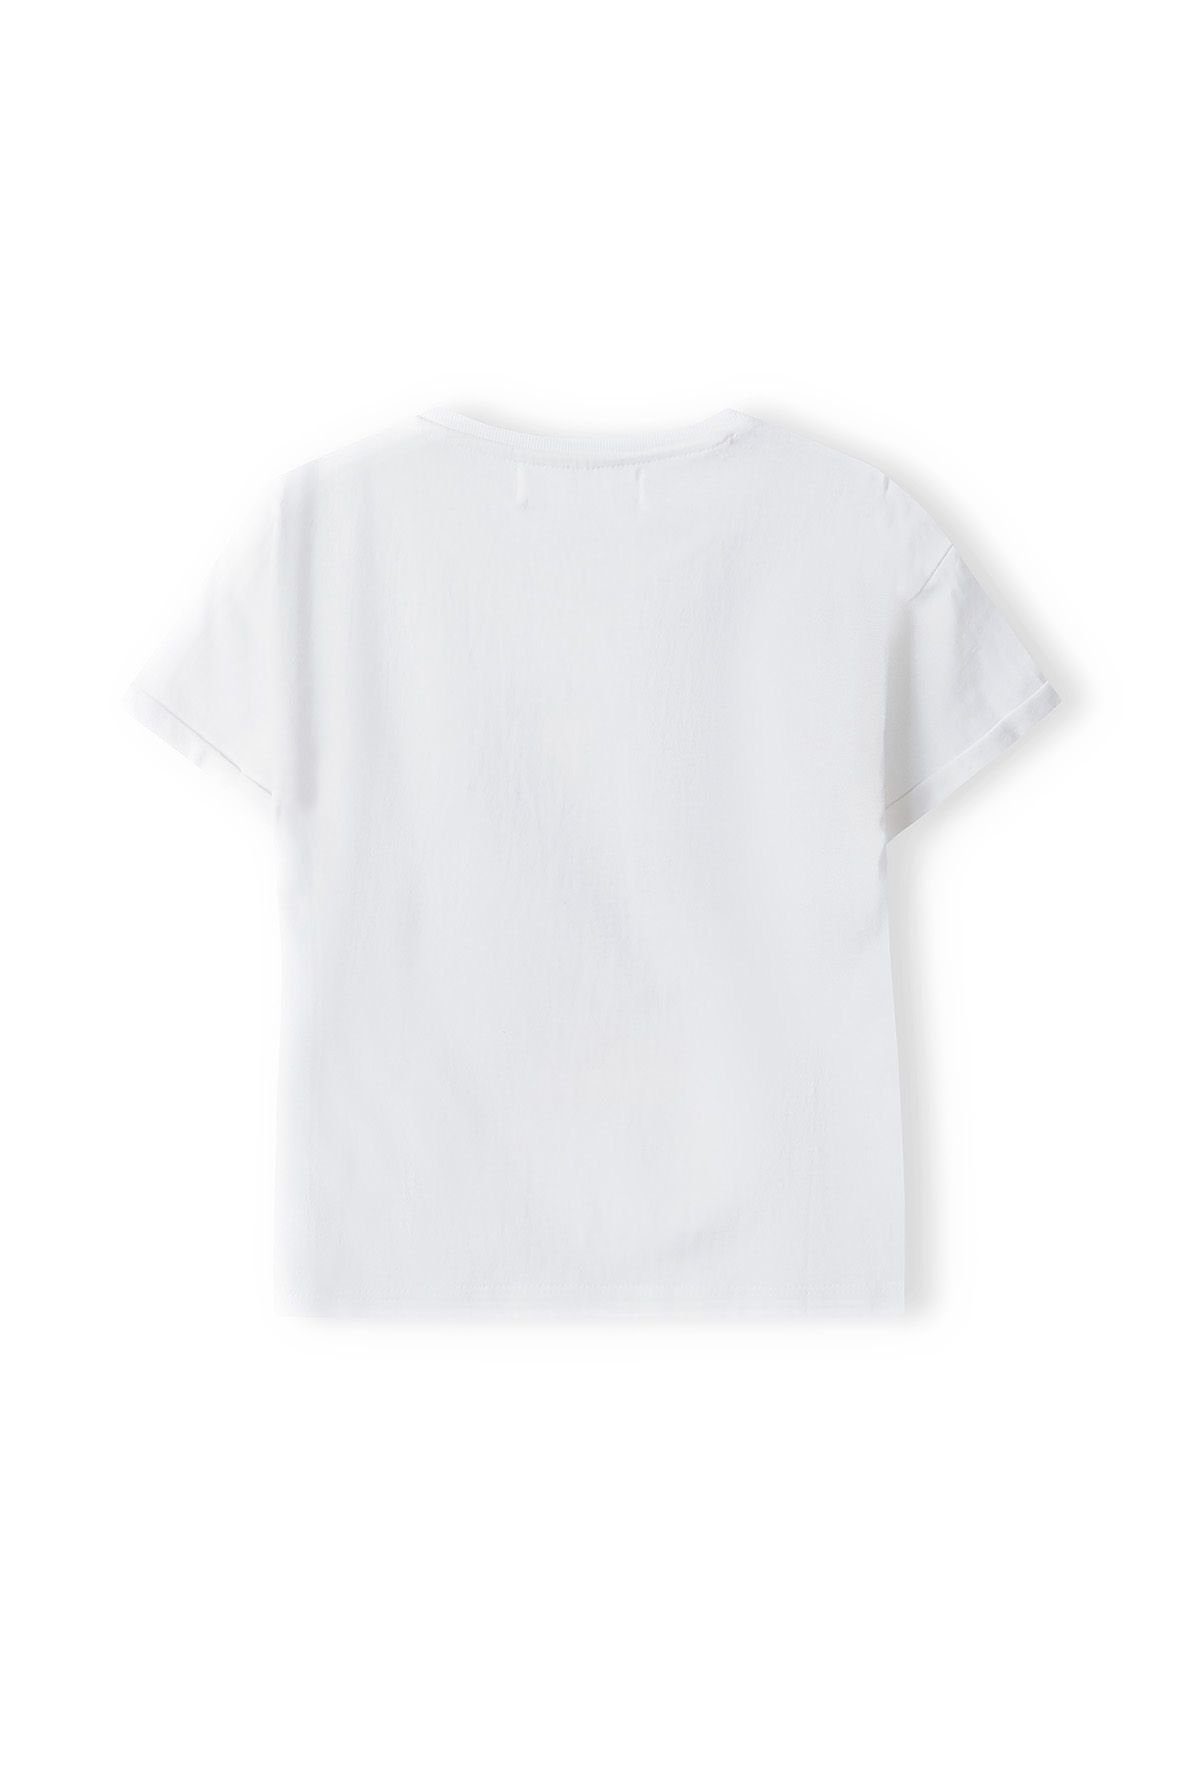 MINOTI T-Shirt T-Shirt (3y-14y)